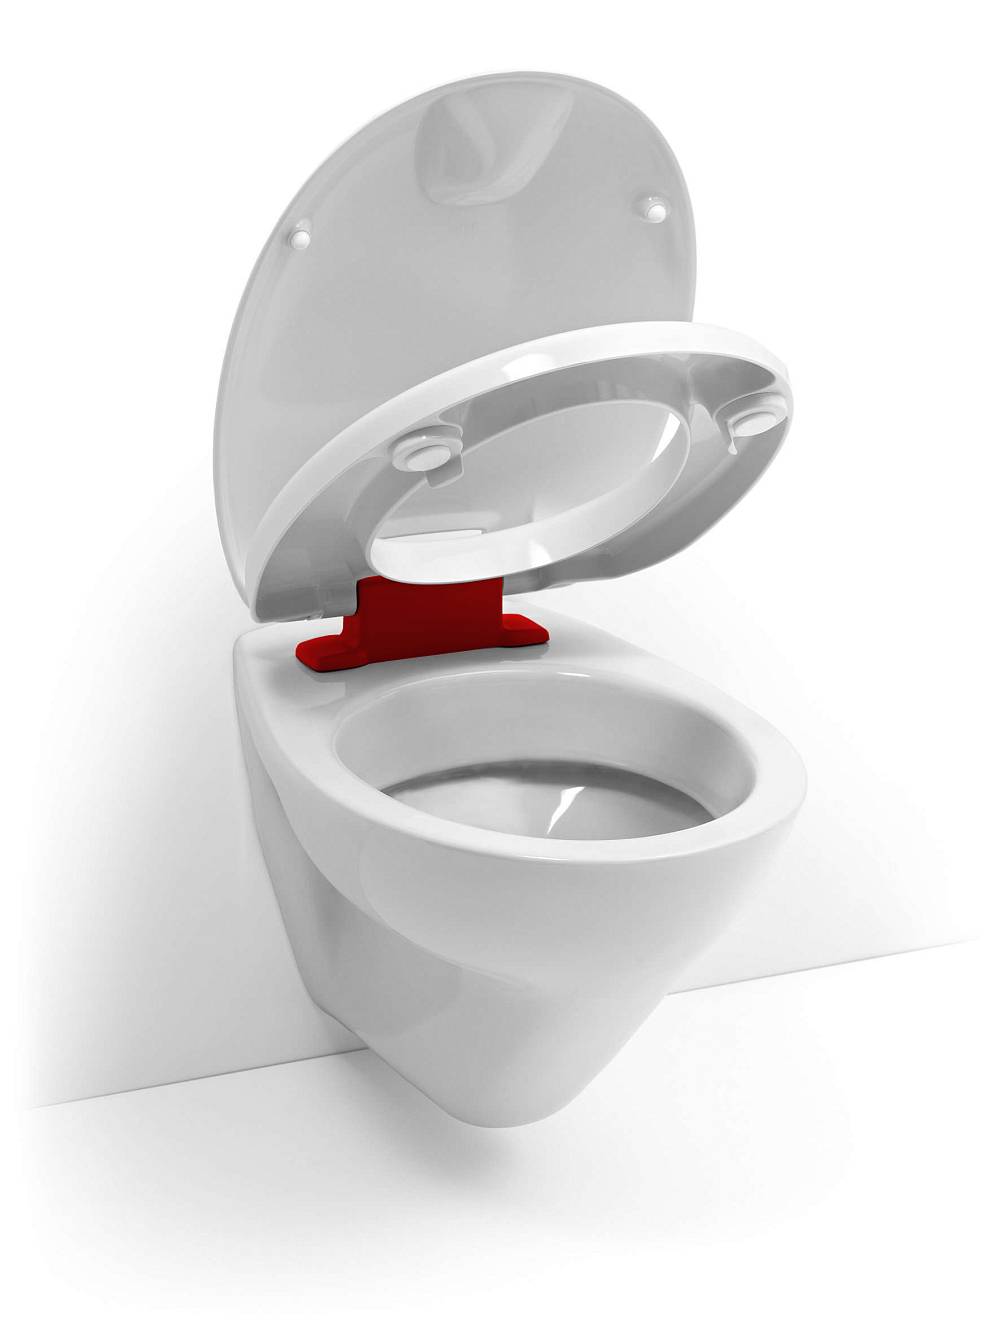 Darstellung HAROMED Toilettensitz mit Absenkautomatik.